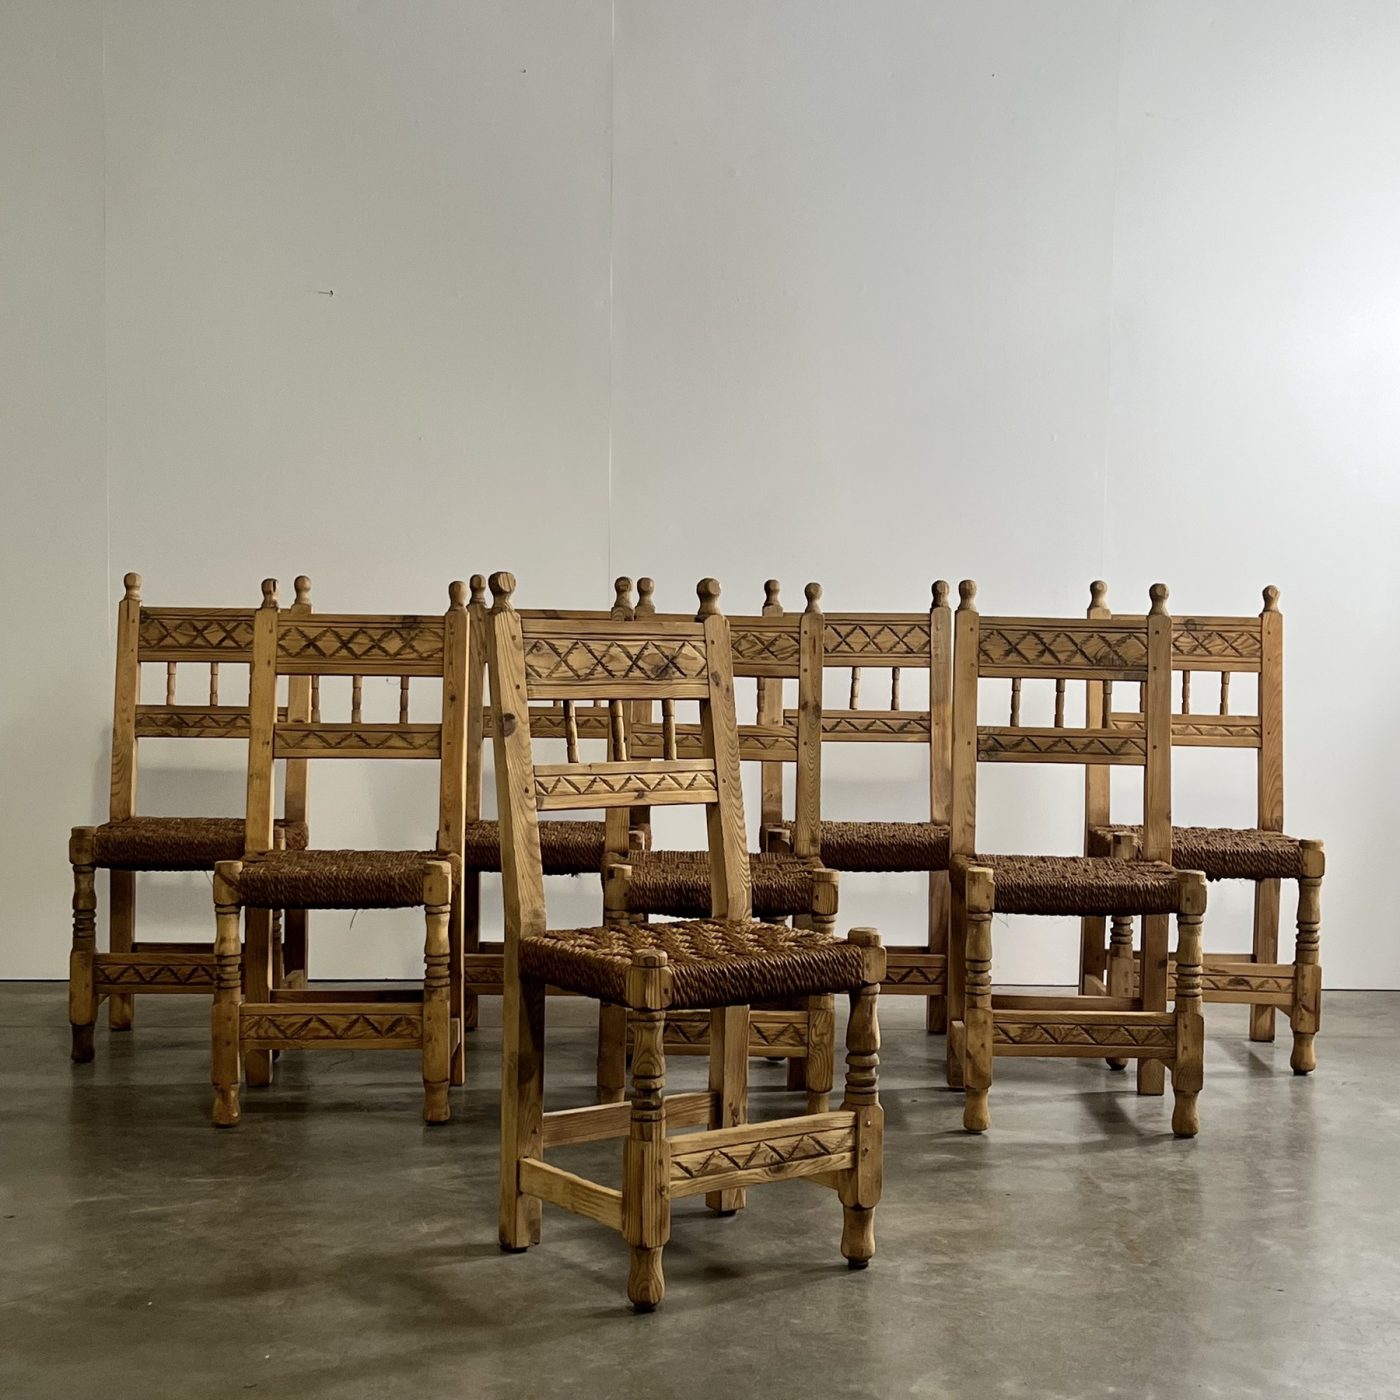 objet-vagabond-rope-chairs0003